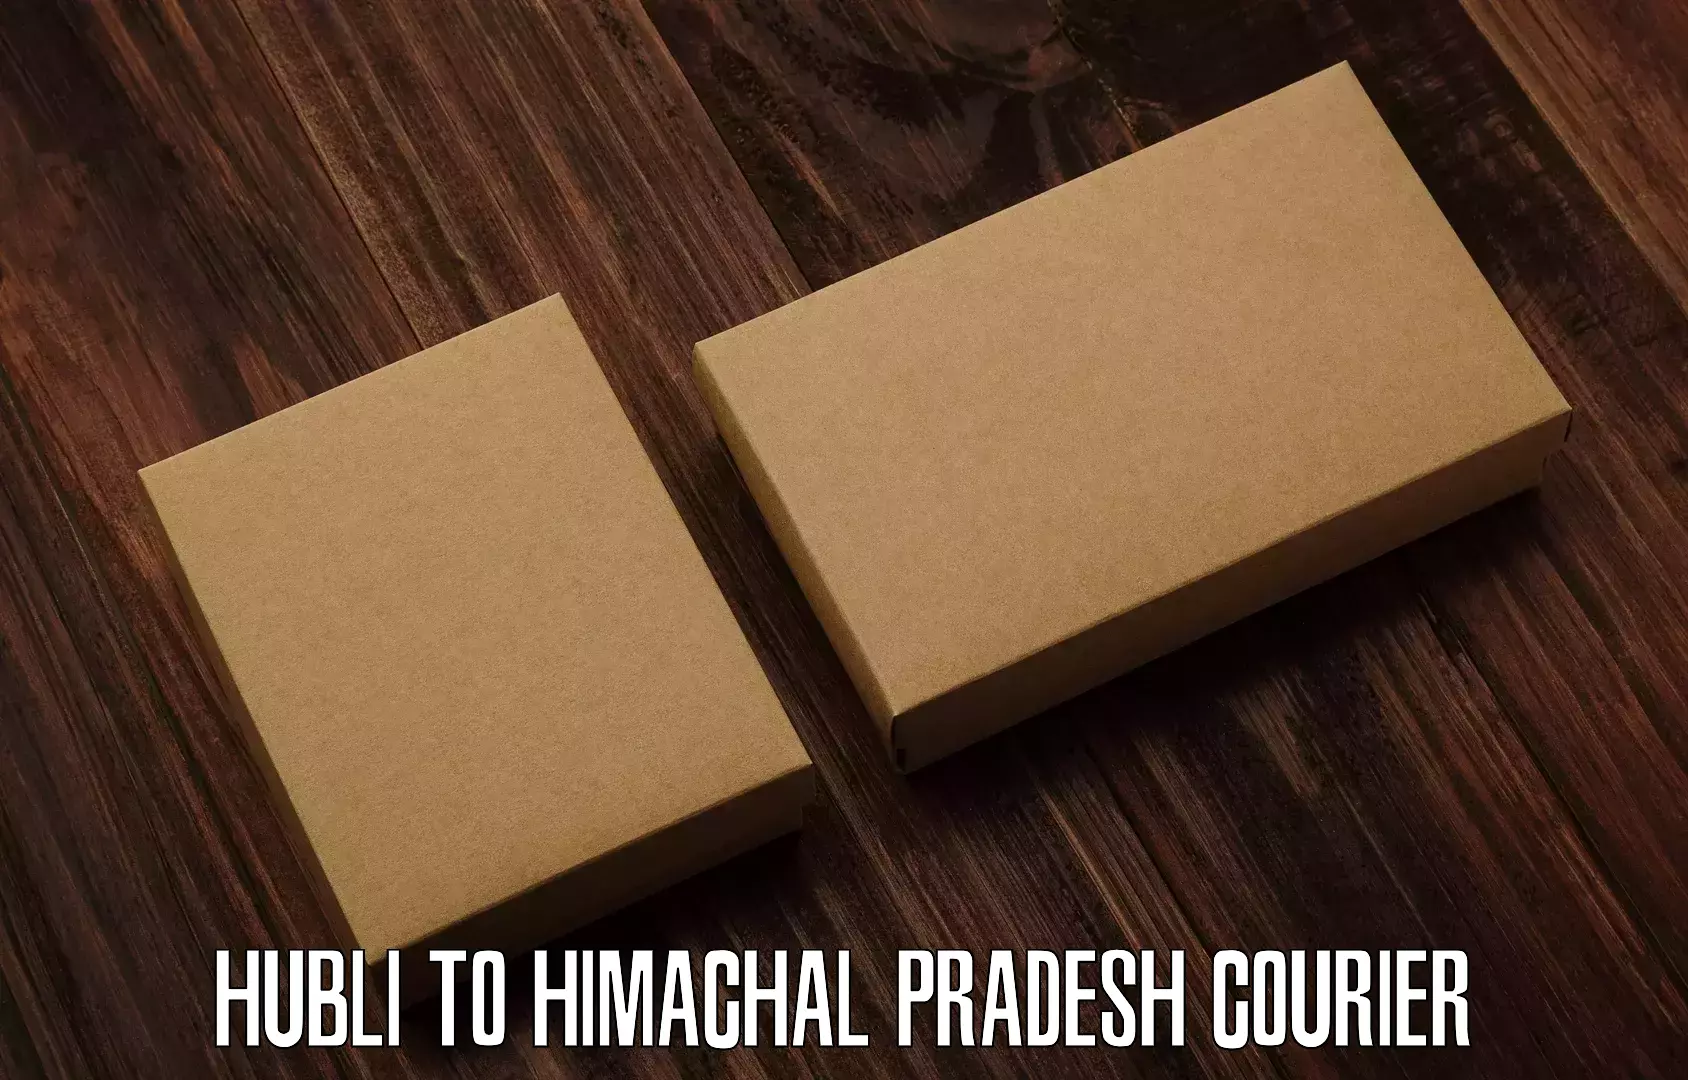 Courier service comparison Hubli to Himachal Pradesh